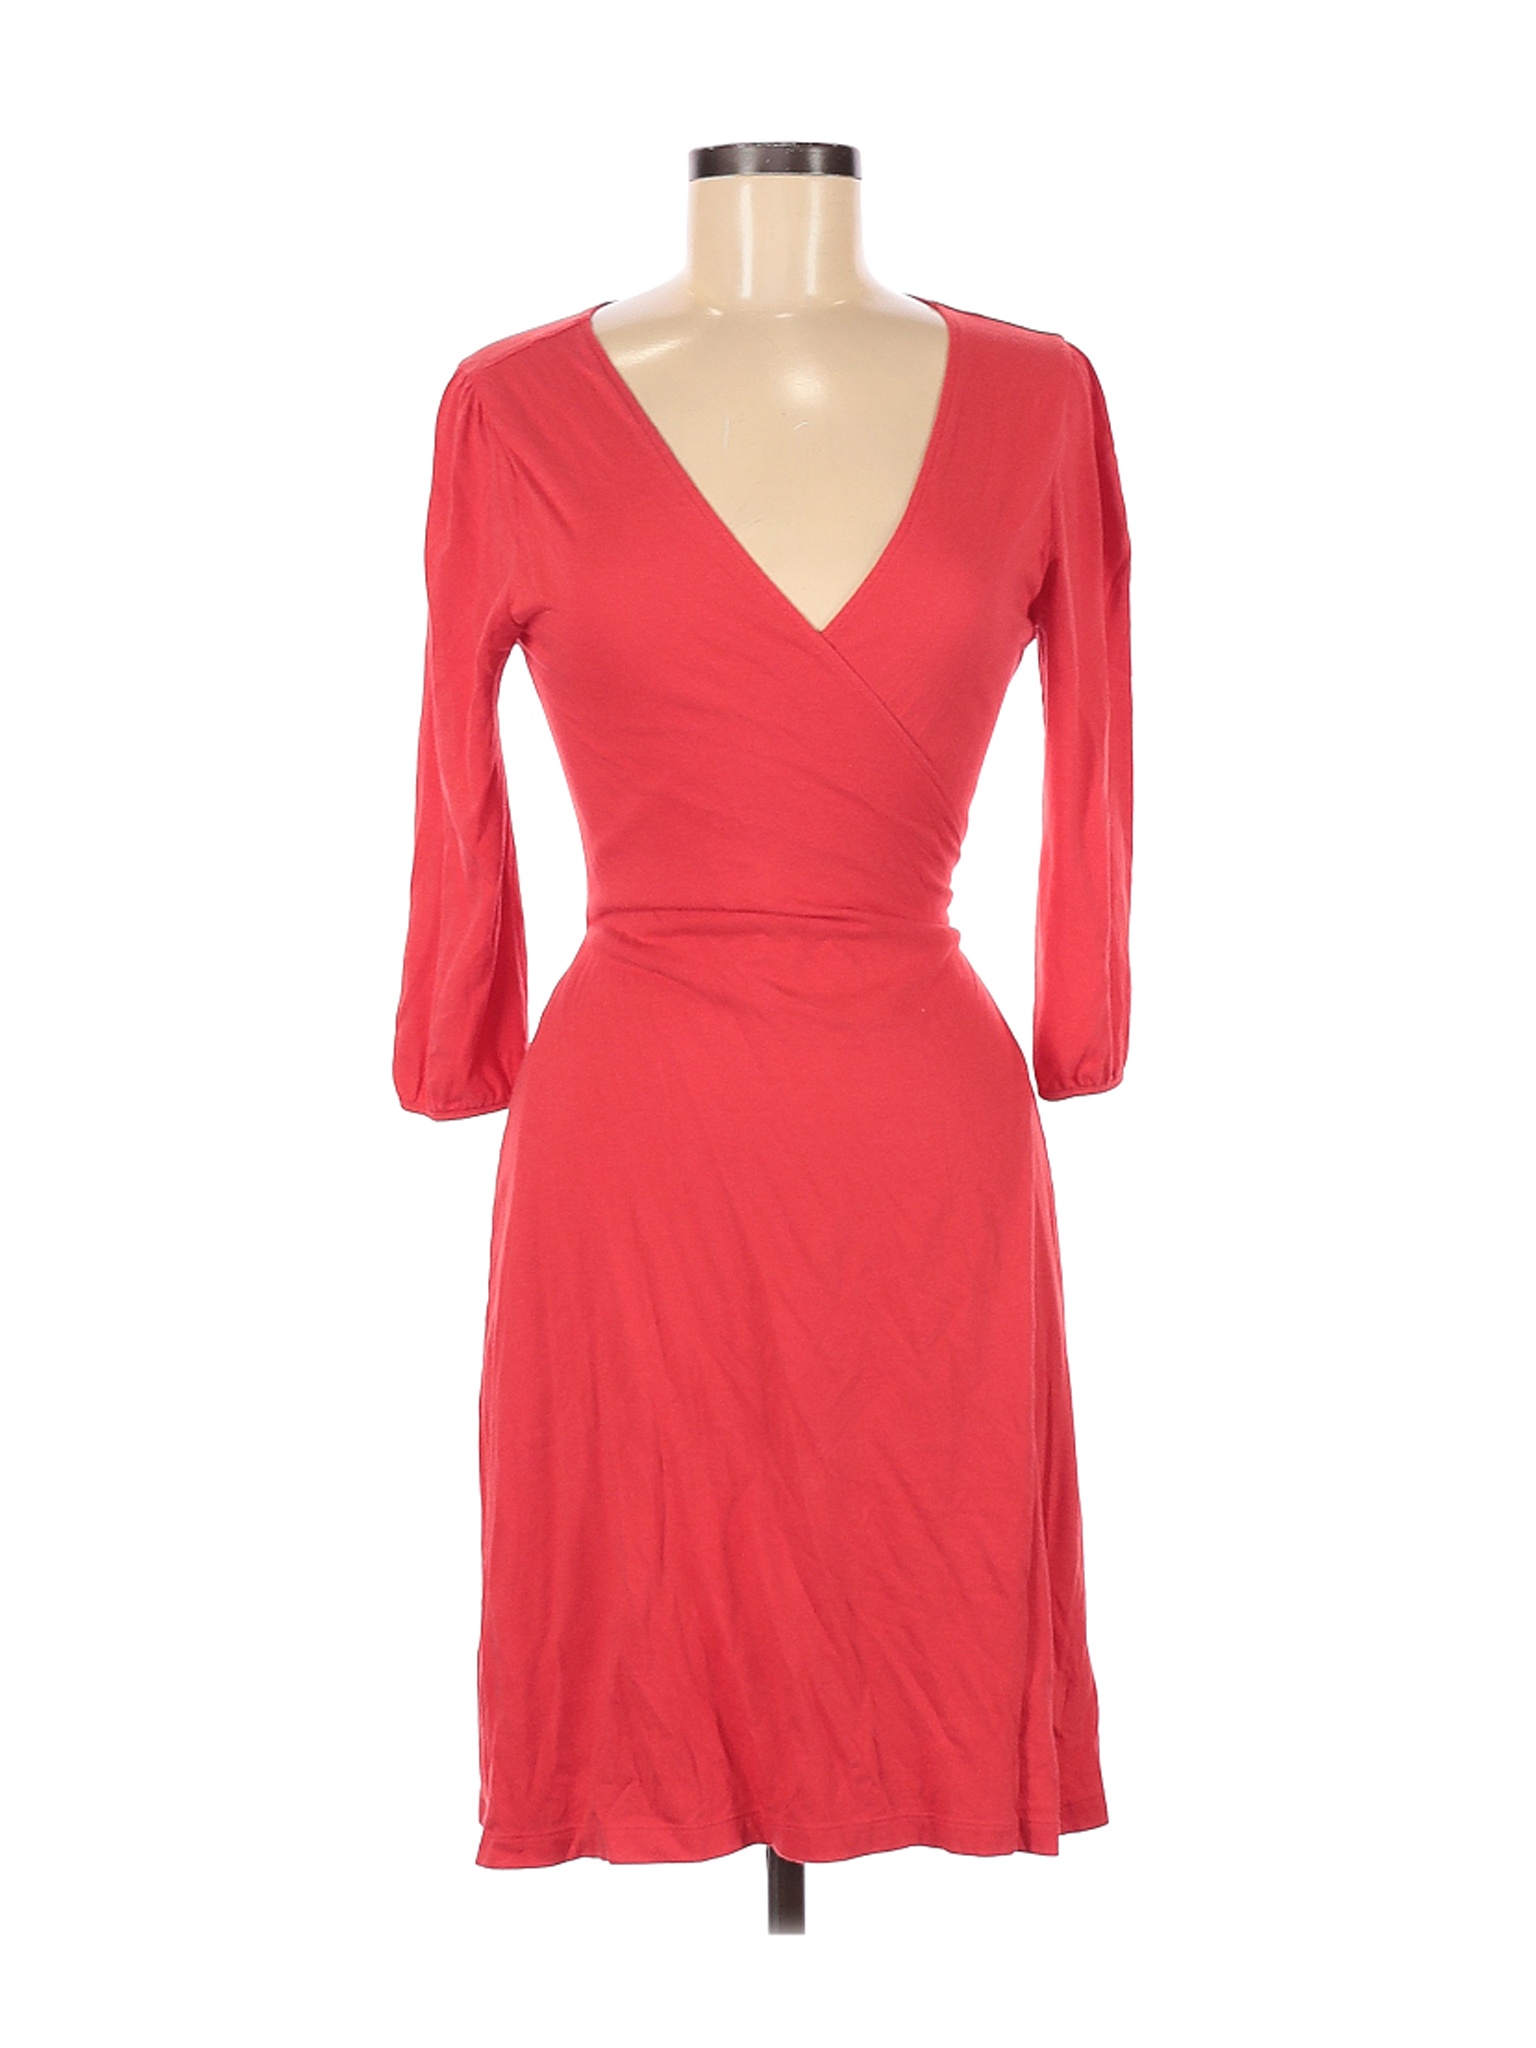 Old Navy Women Red Casual Dress M | eBay